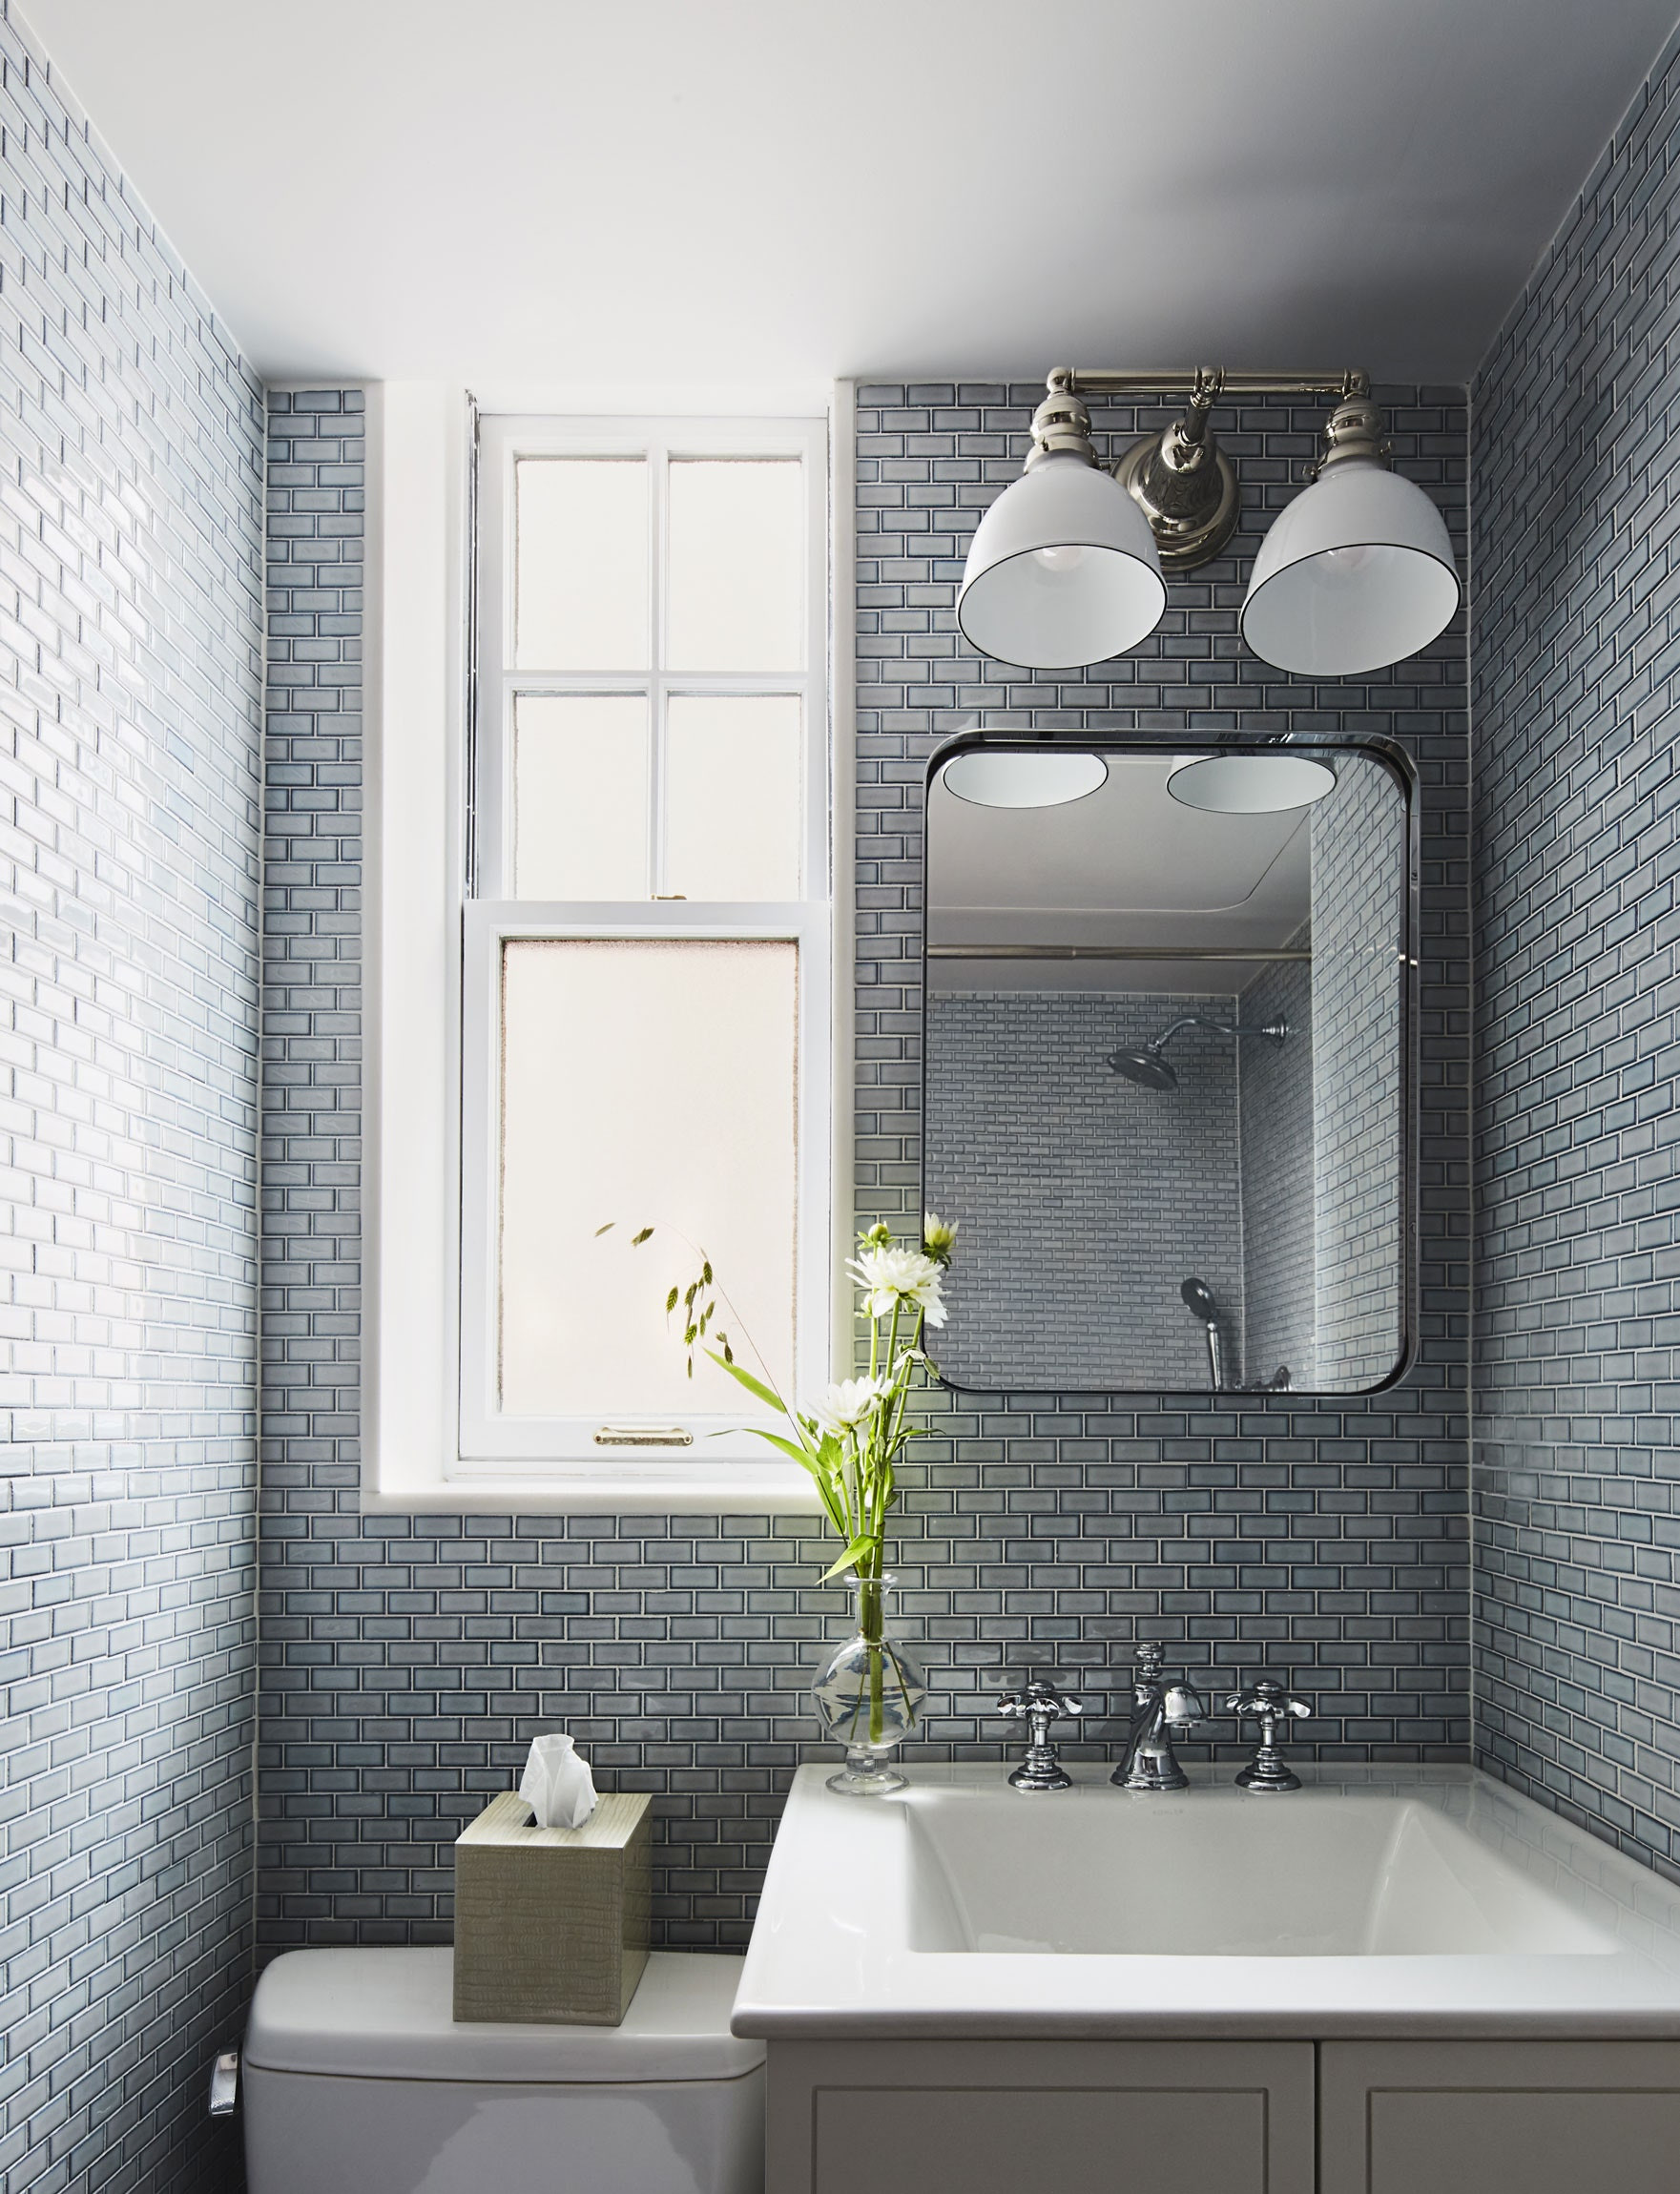 Bathroom Shower Tile Gallery
 This Bathroom Tile Design Idea Changes Everything